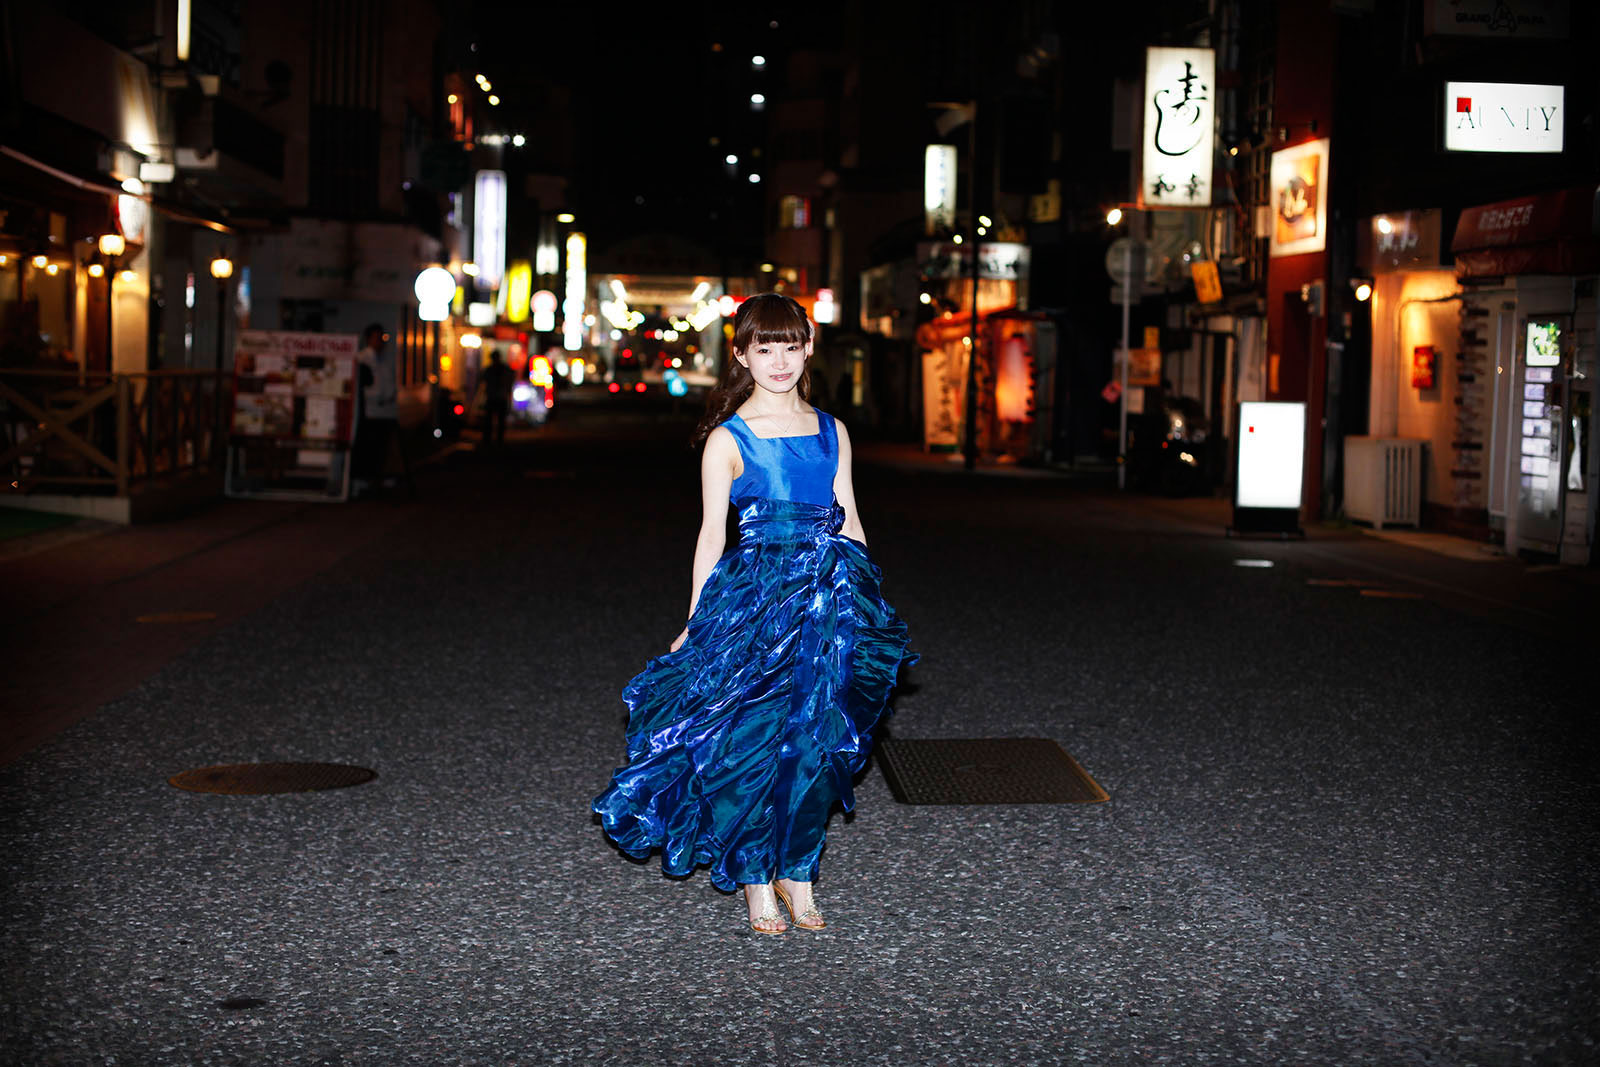   A girl in a blue dress Sasebo, Japan 2015        